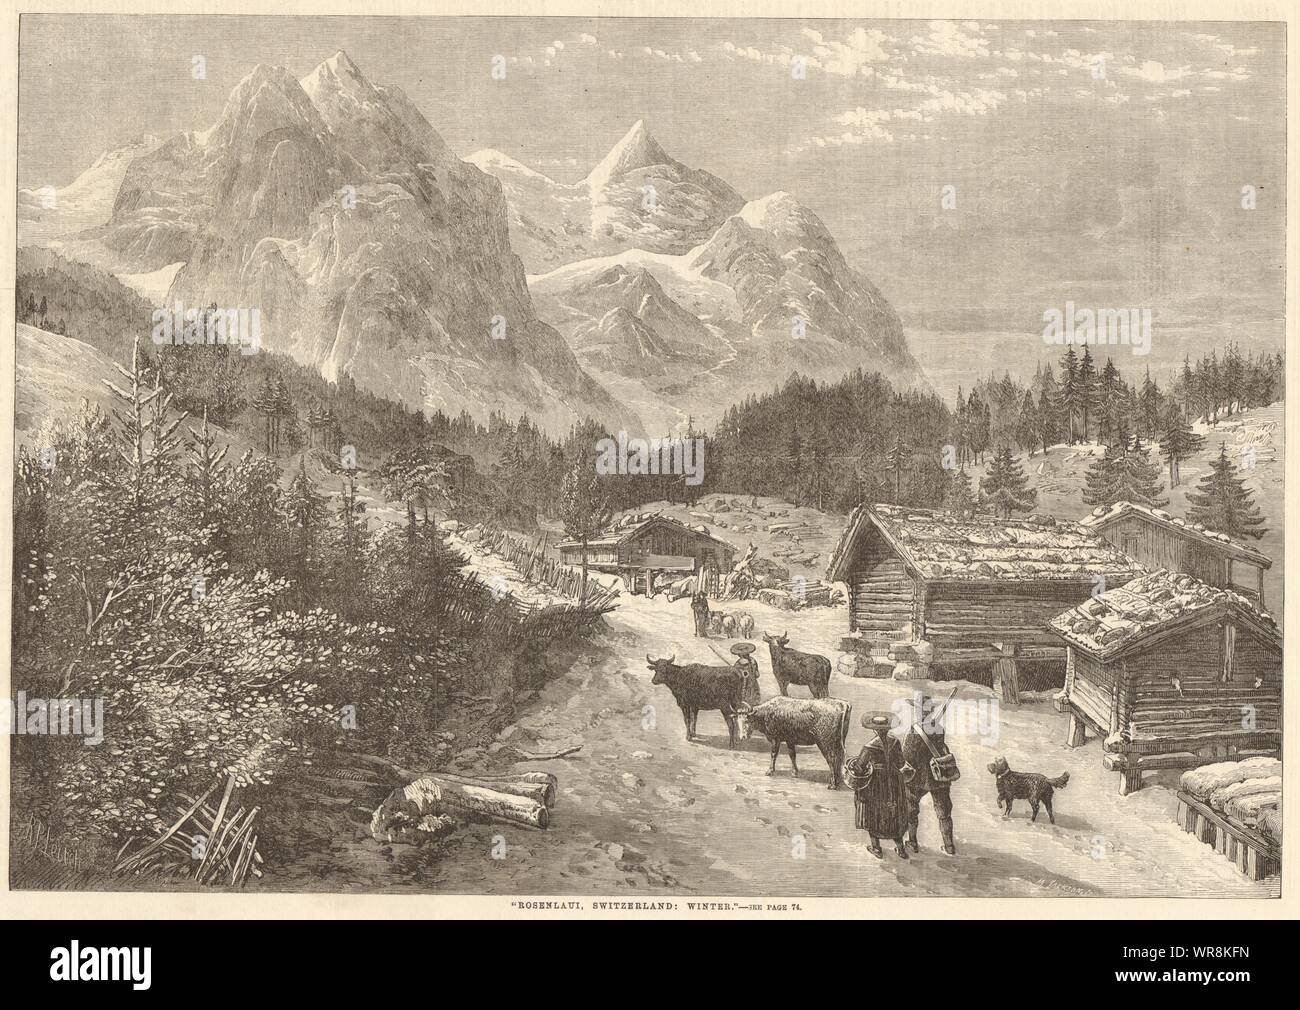 'Rosenlaui, Switzerland: winter' 1863 antique ILN full page print Stock Photo